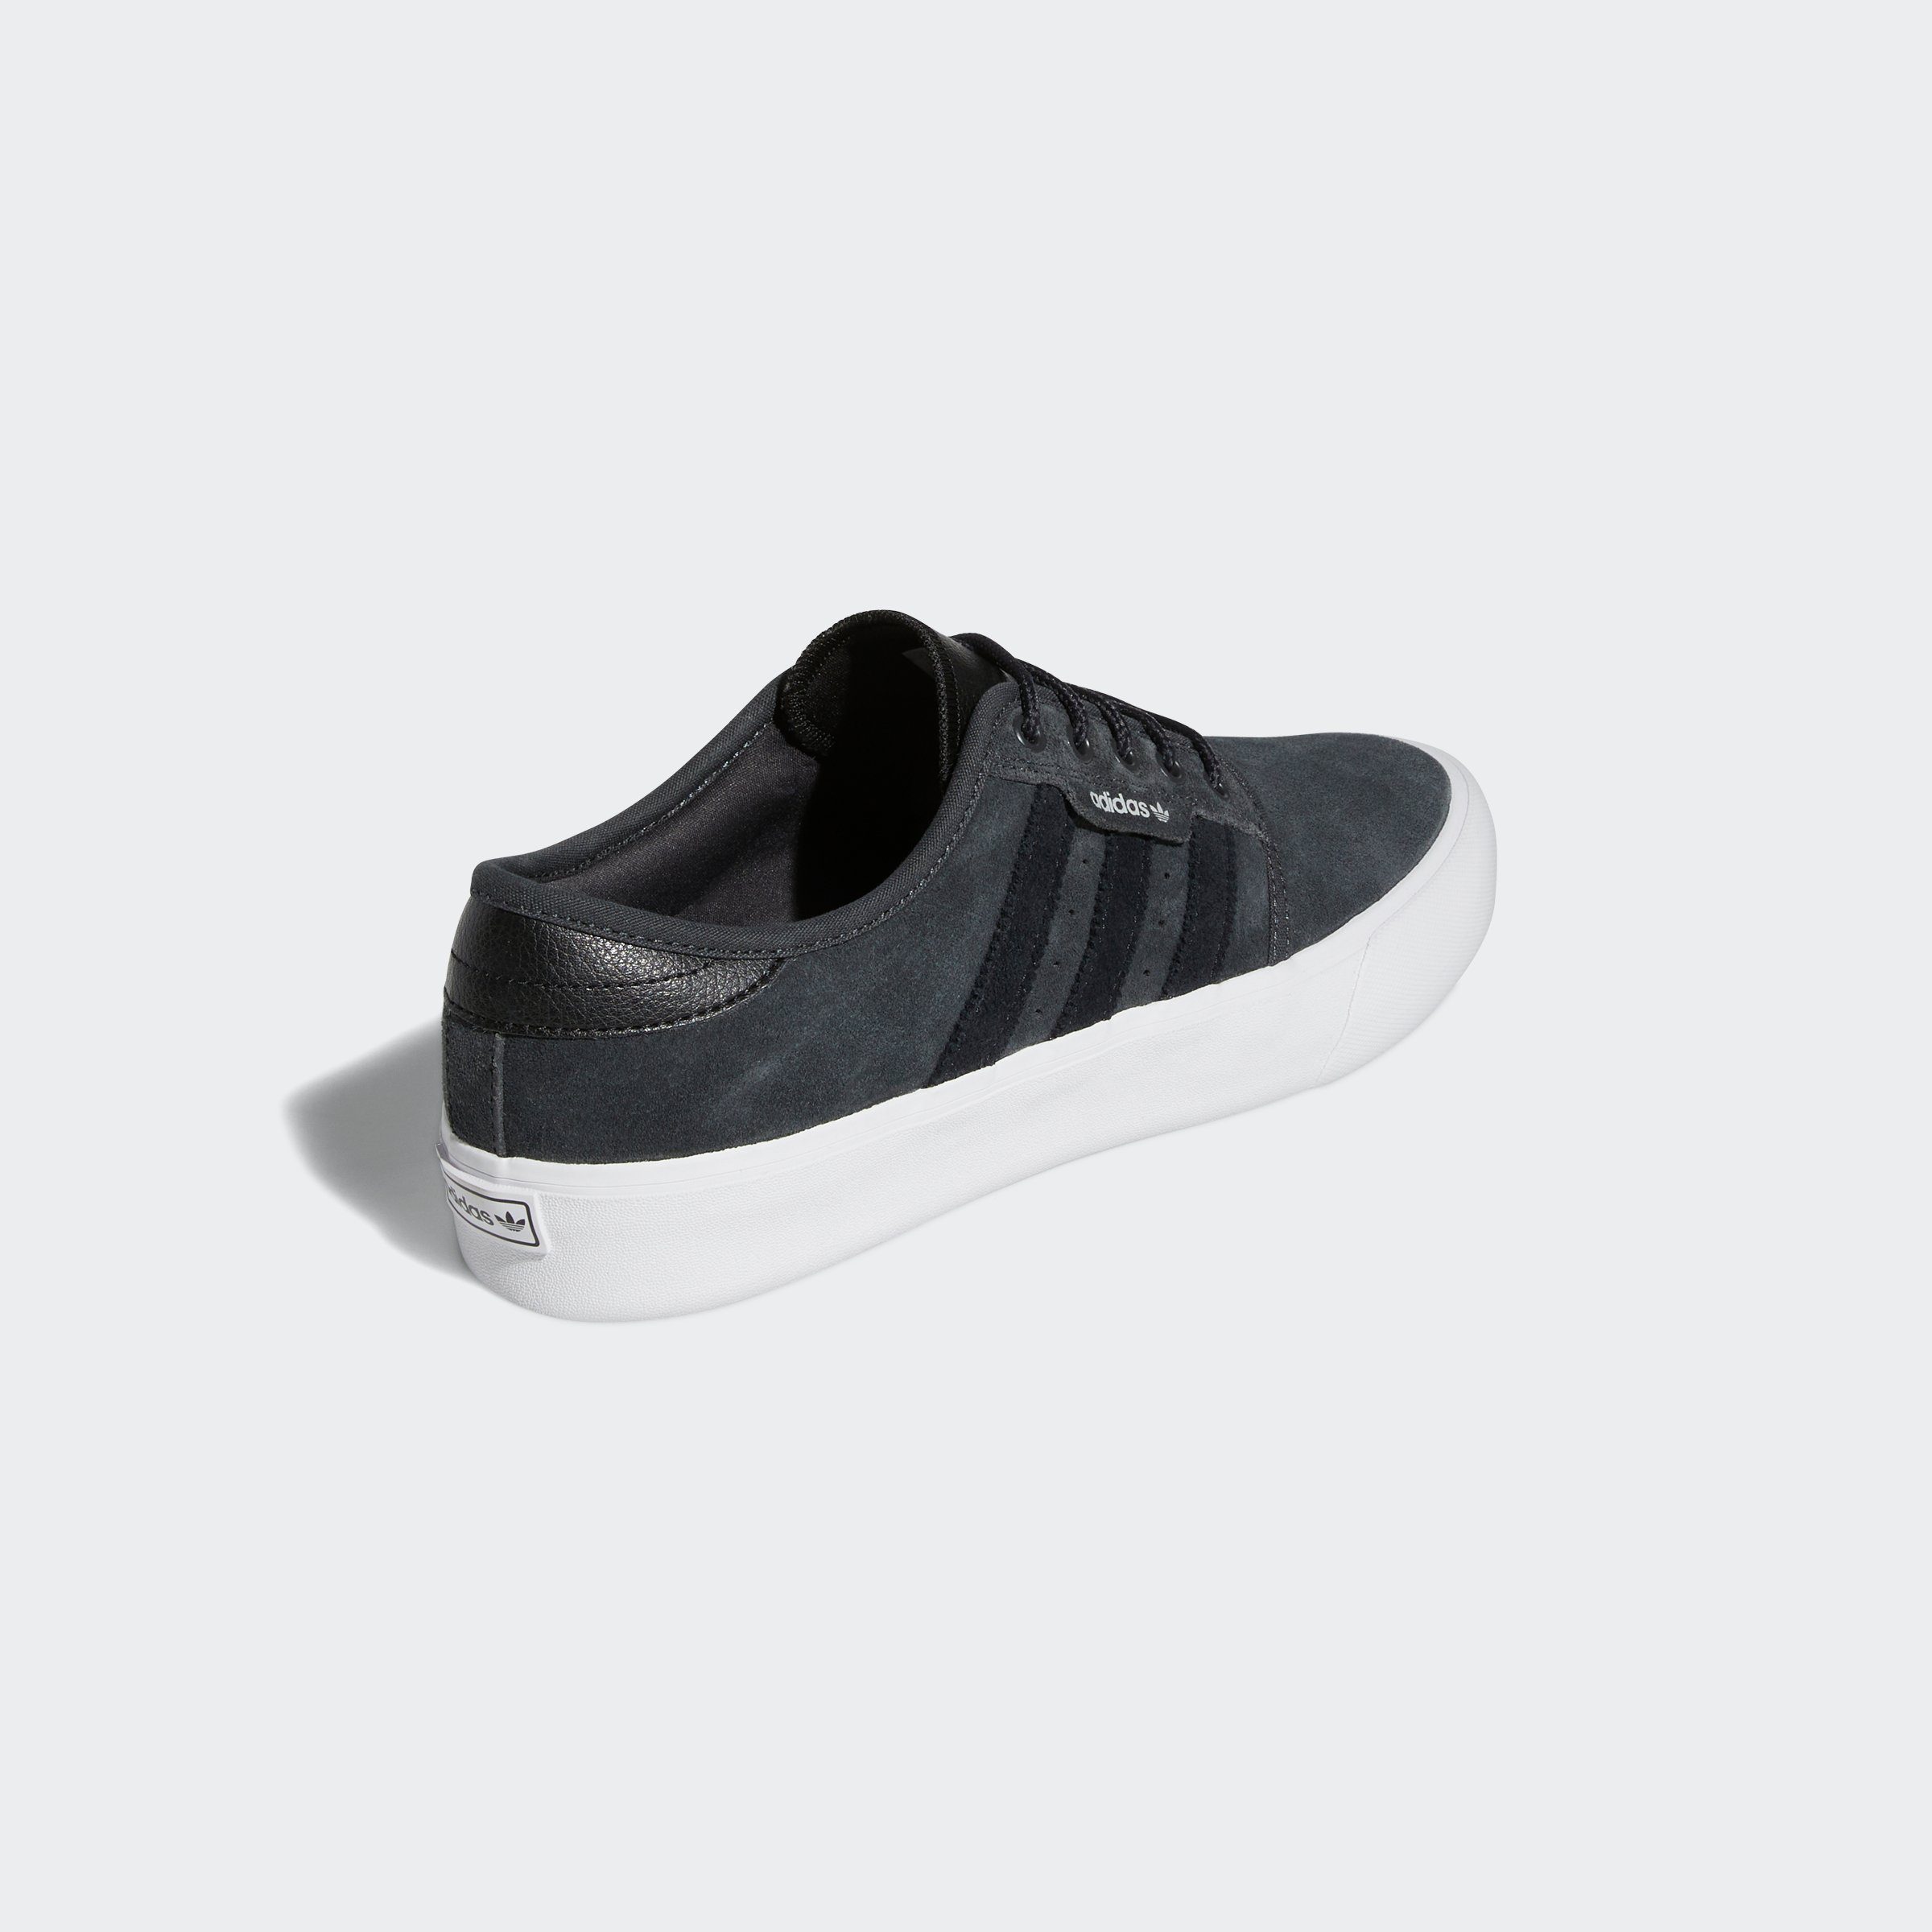 SEELEY Originals adidas Sneaker XT